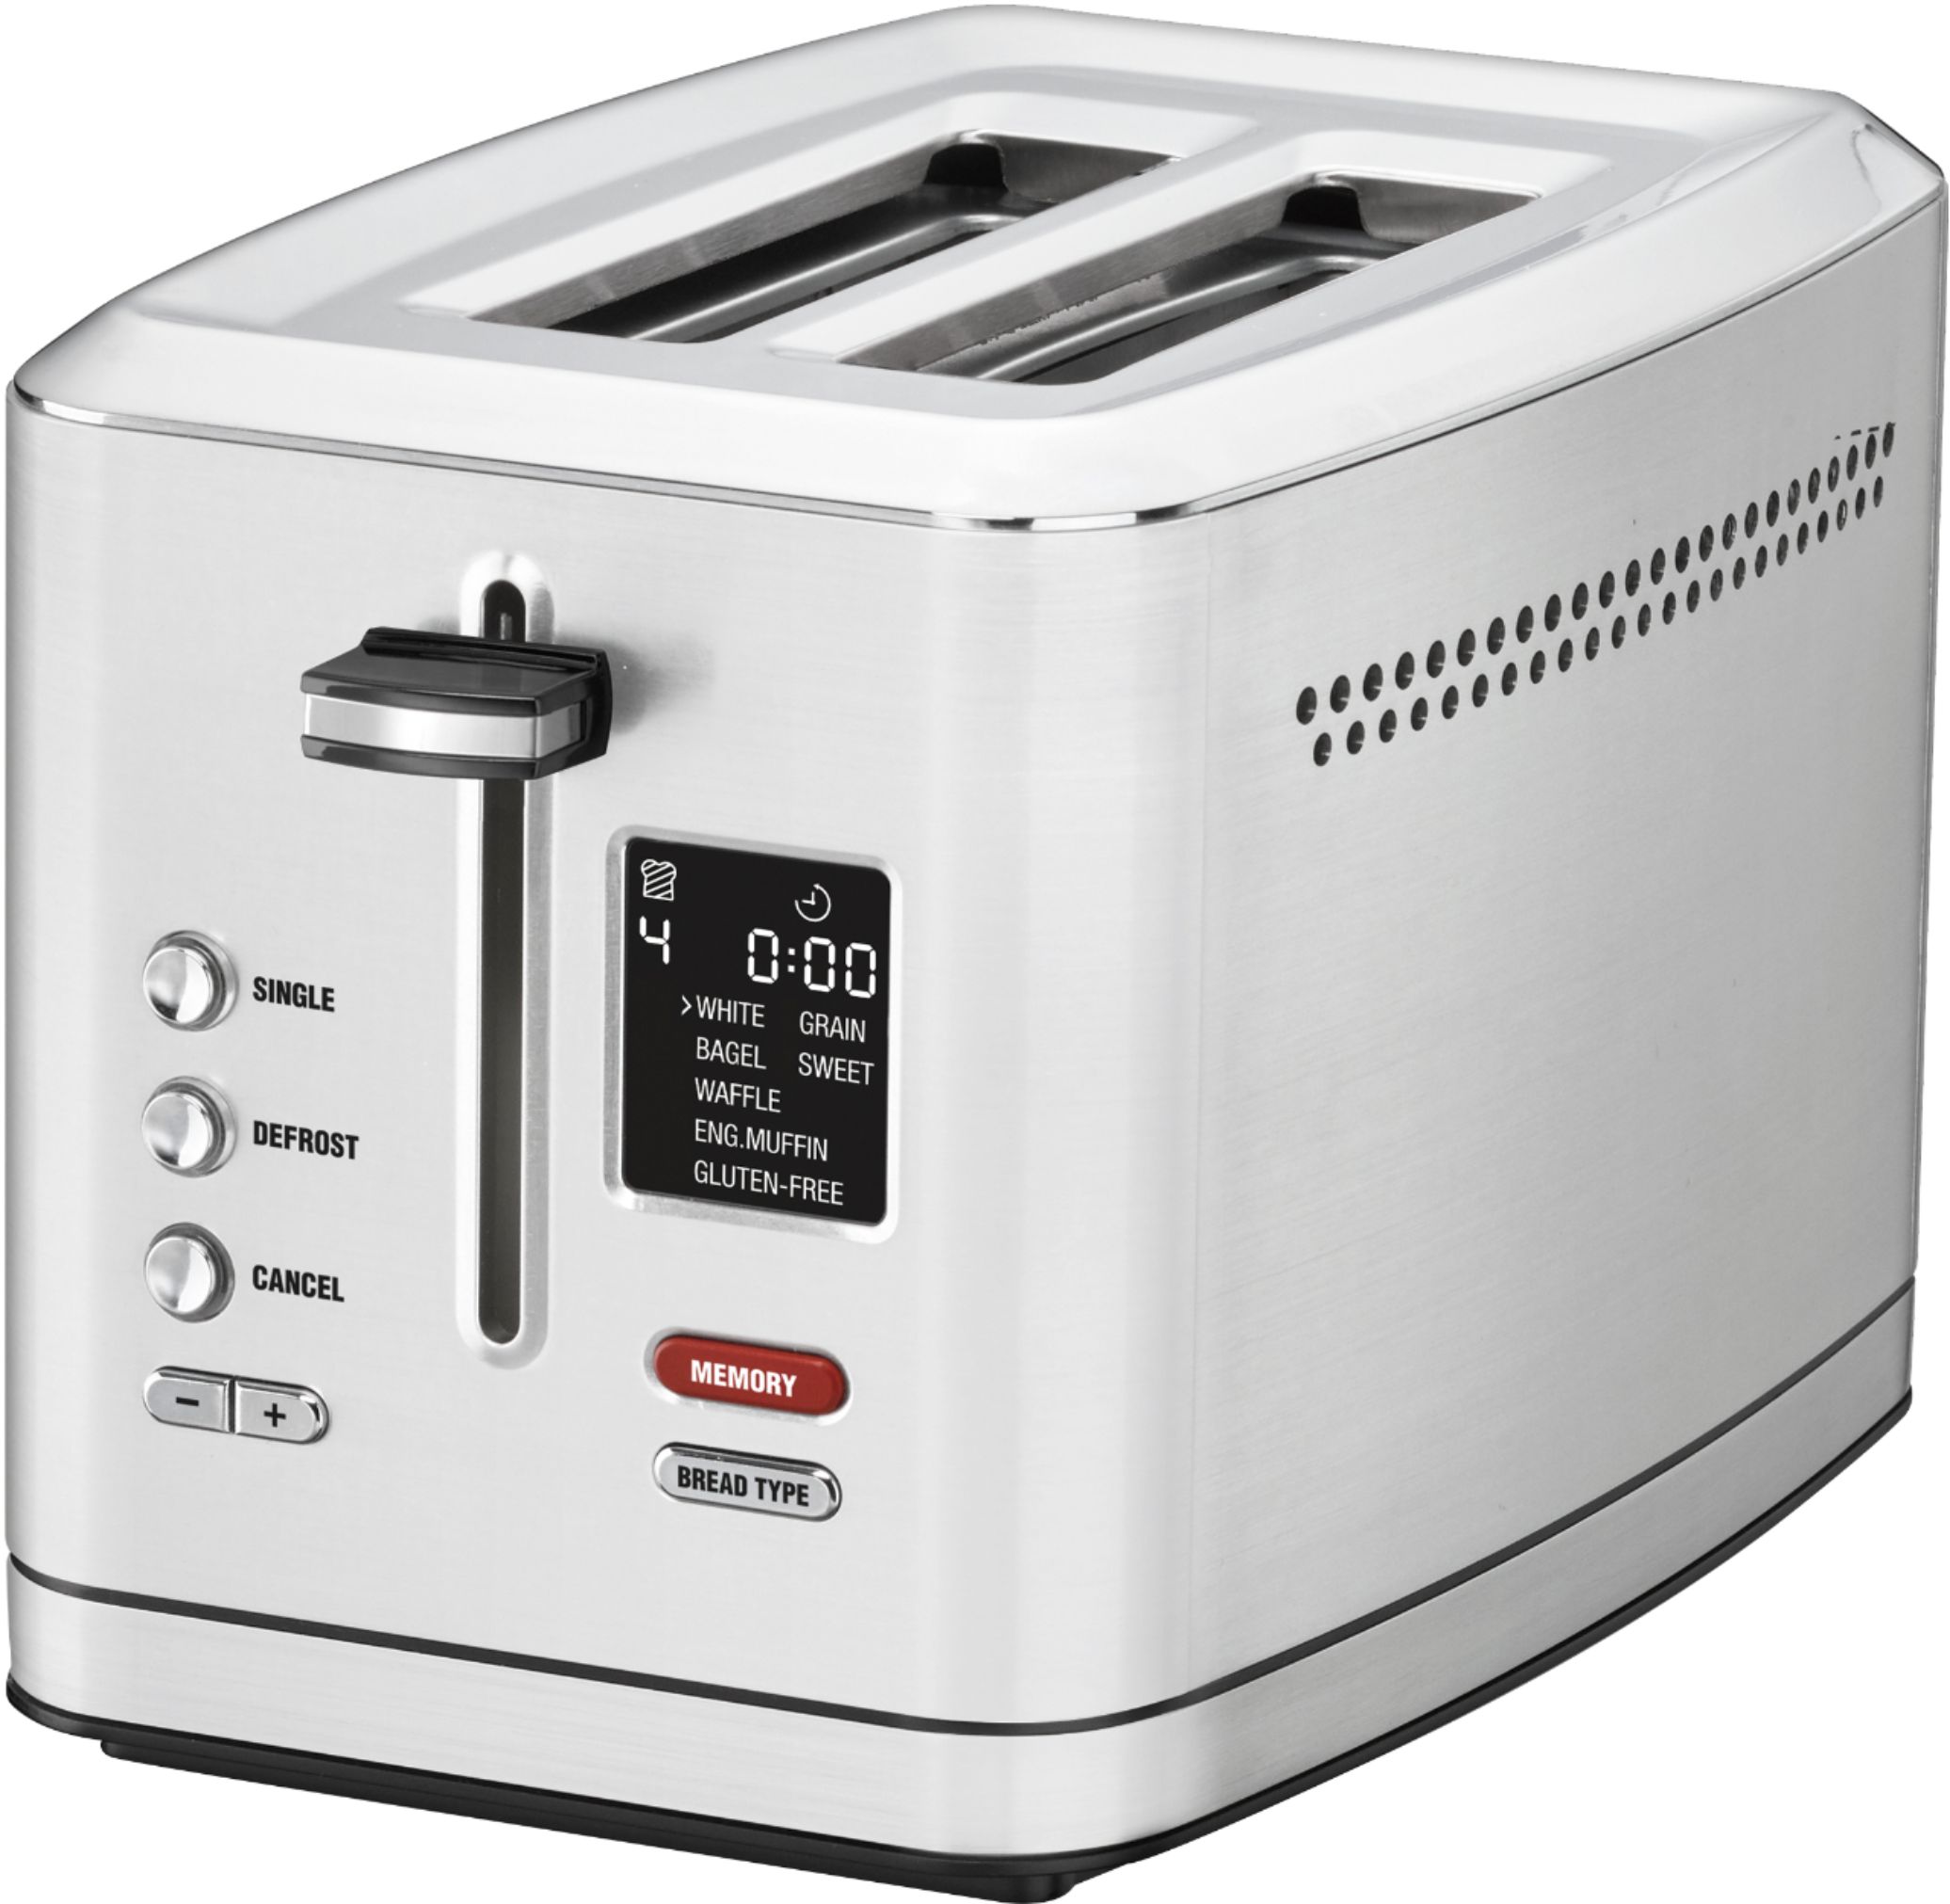 Digital Stainless Steel Toaster, 2 slice